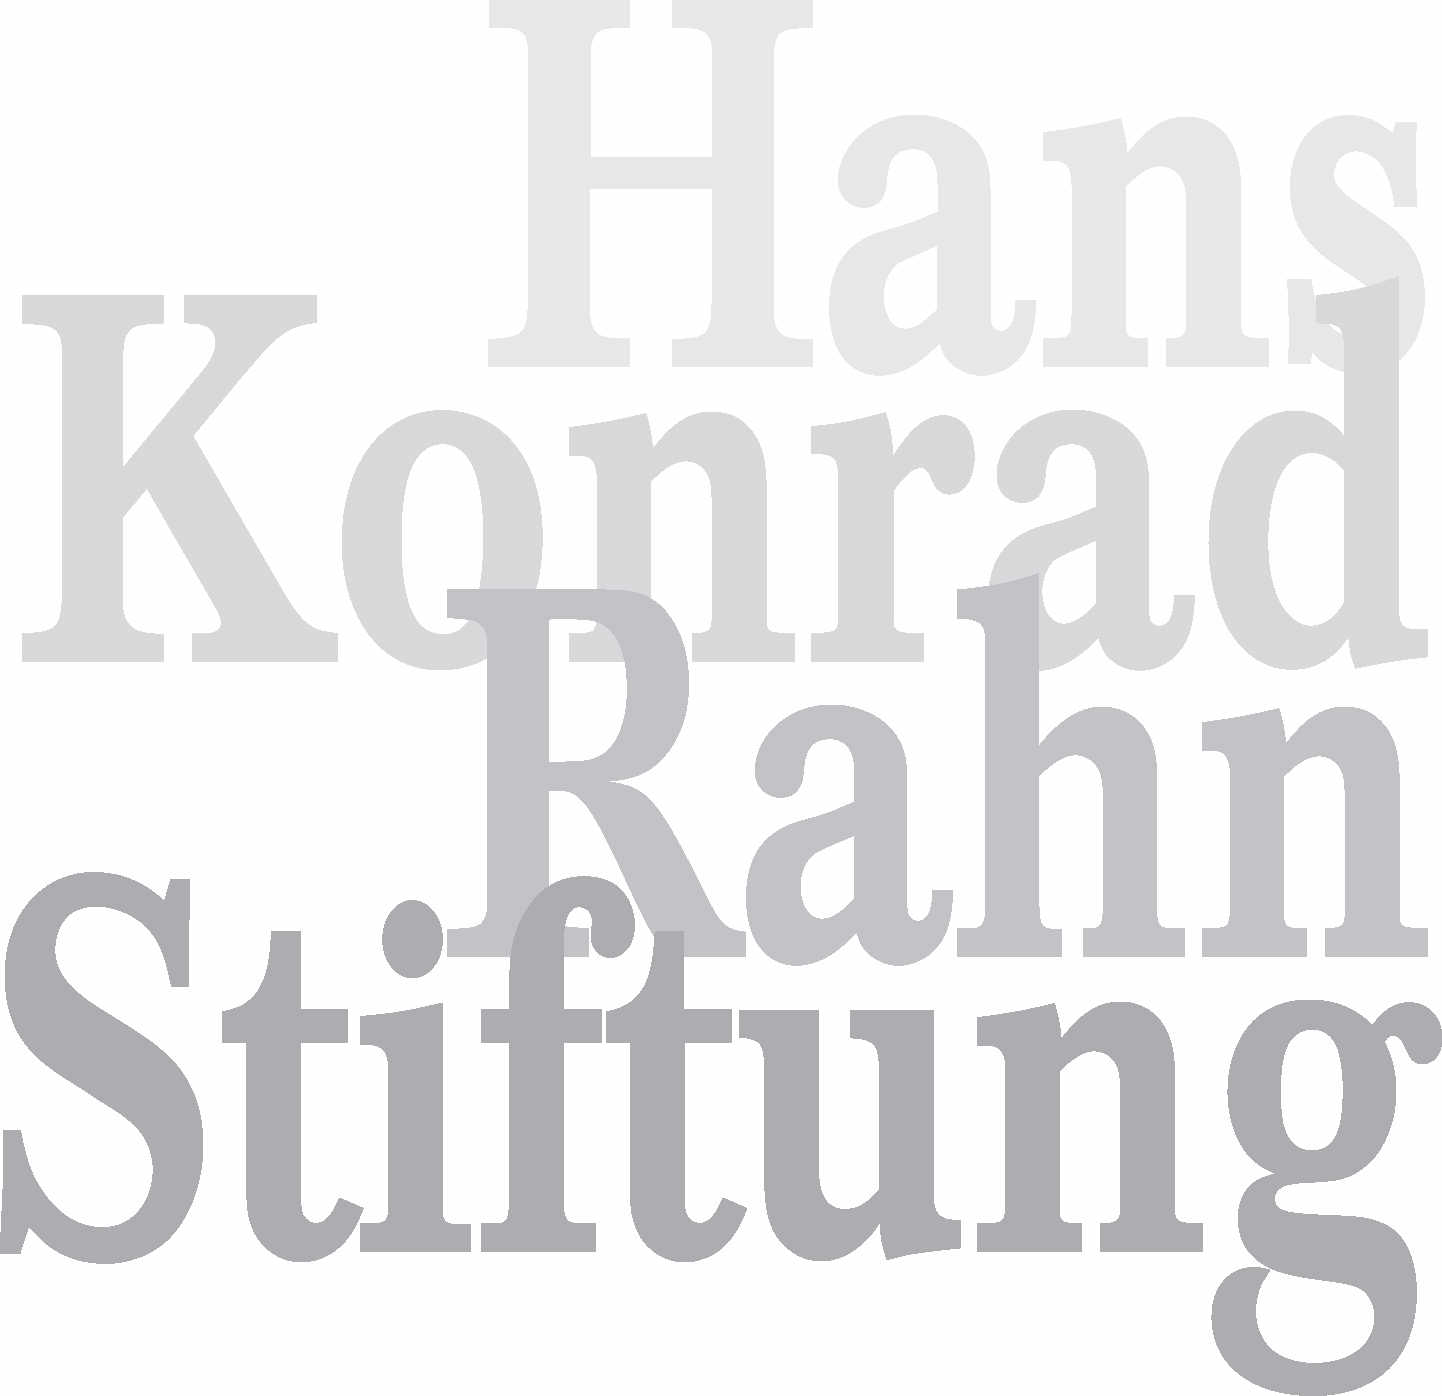 Hans Konrad Rahn Stiftung